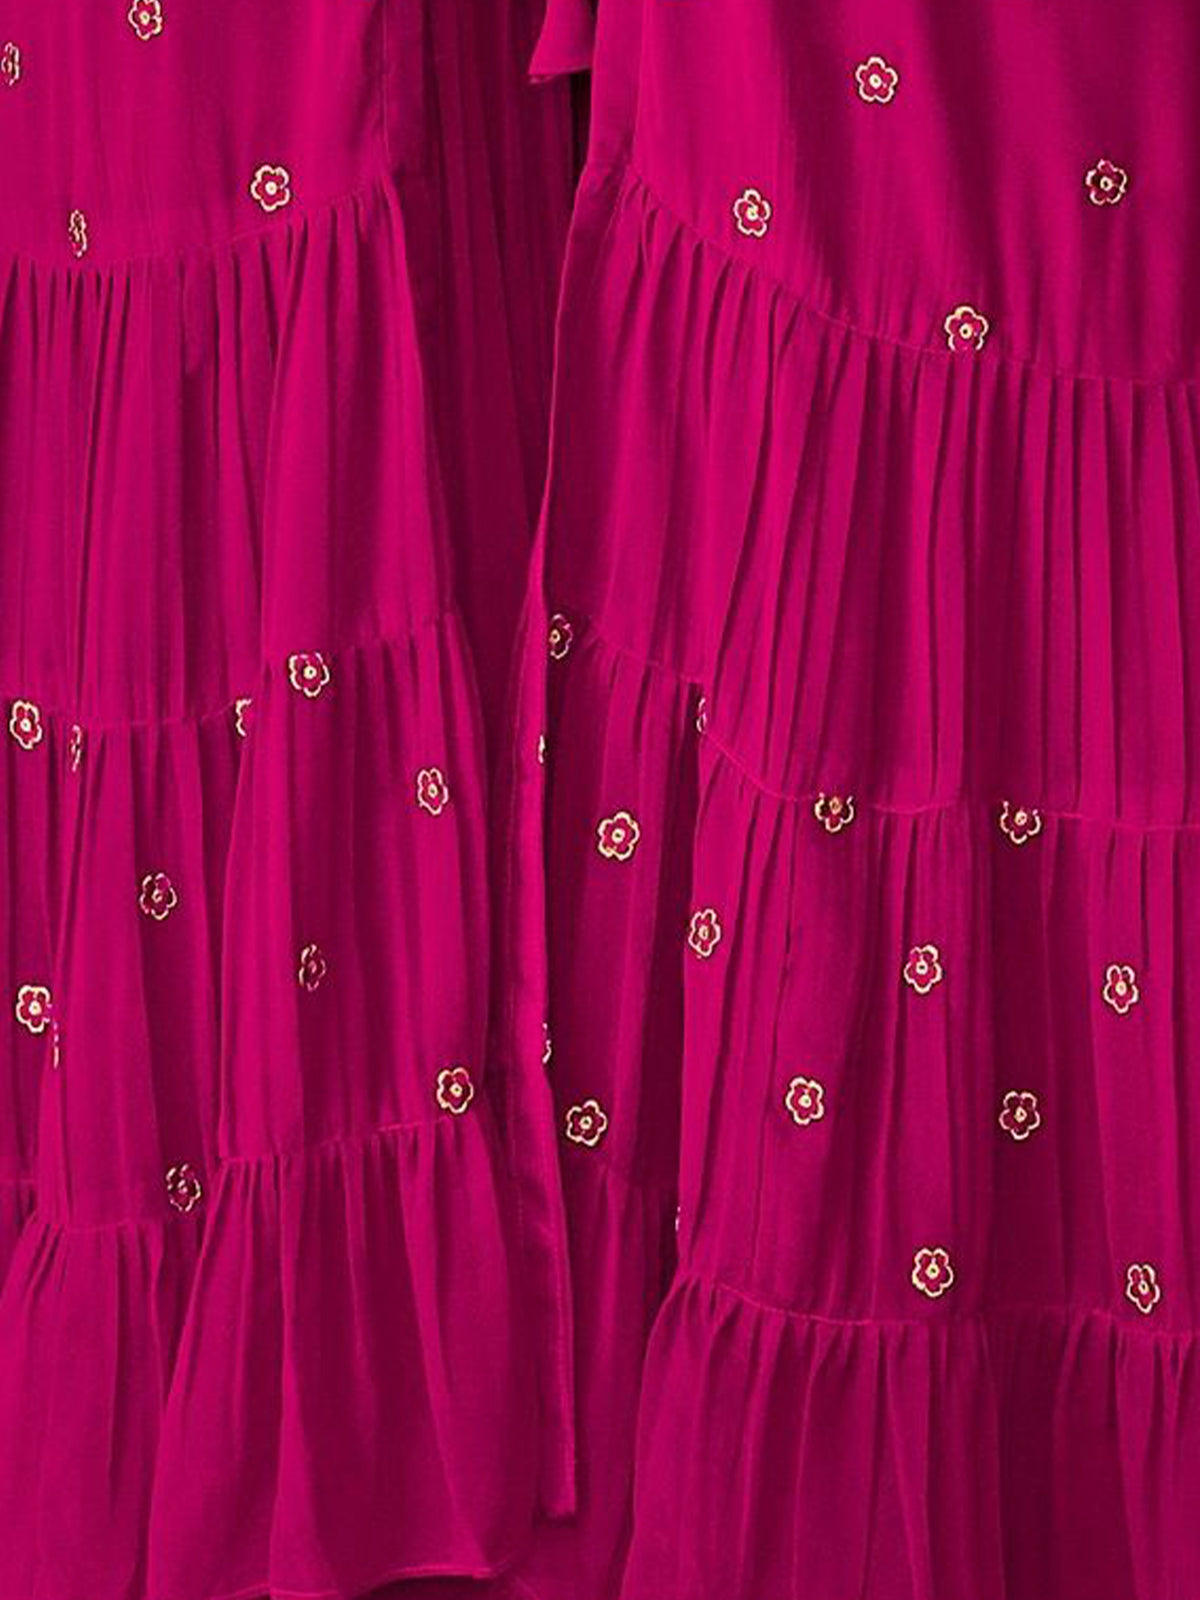 Odette - Pink Georgette Semi Stitched Salwar Suit